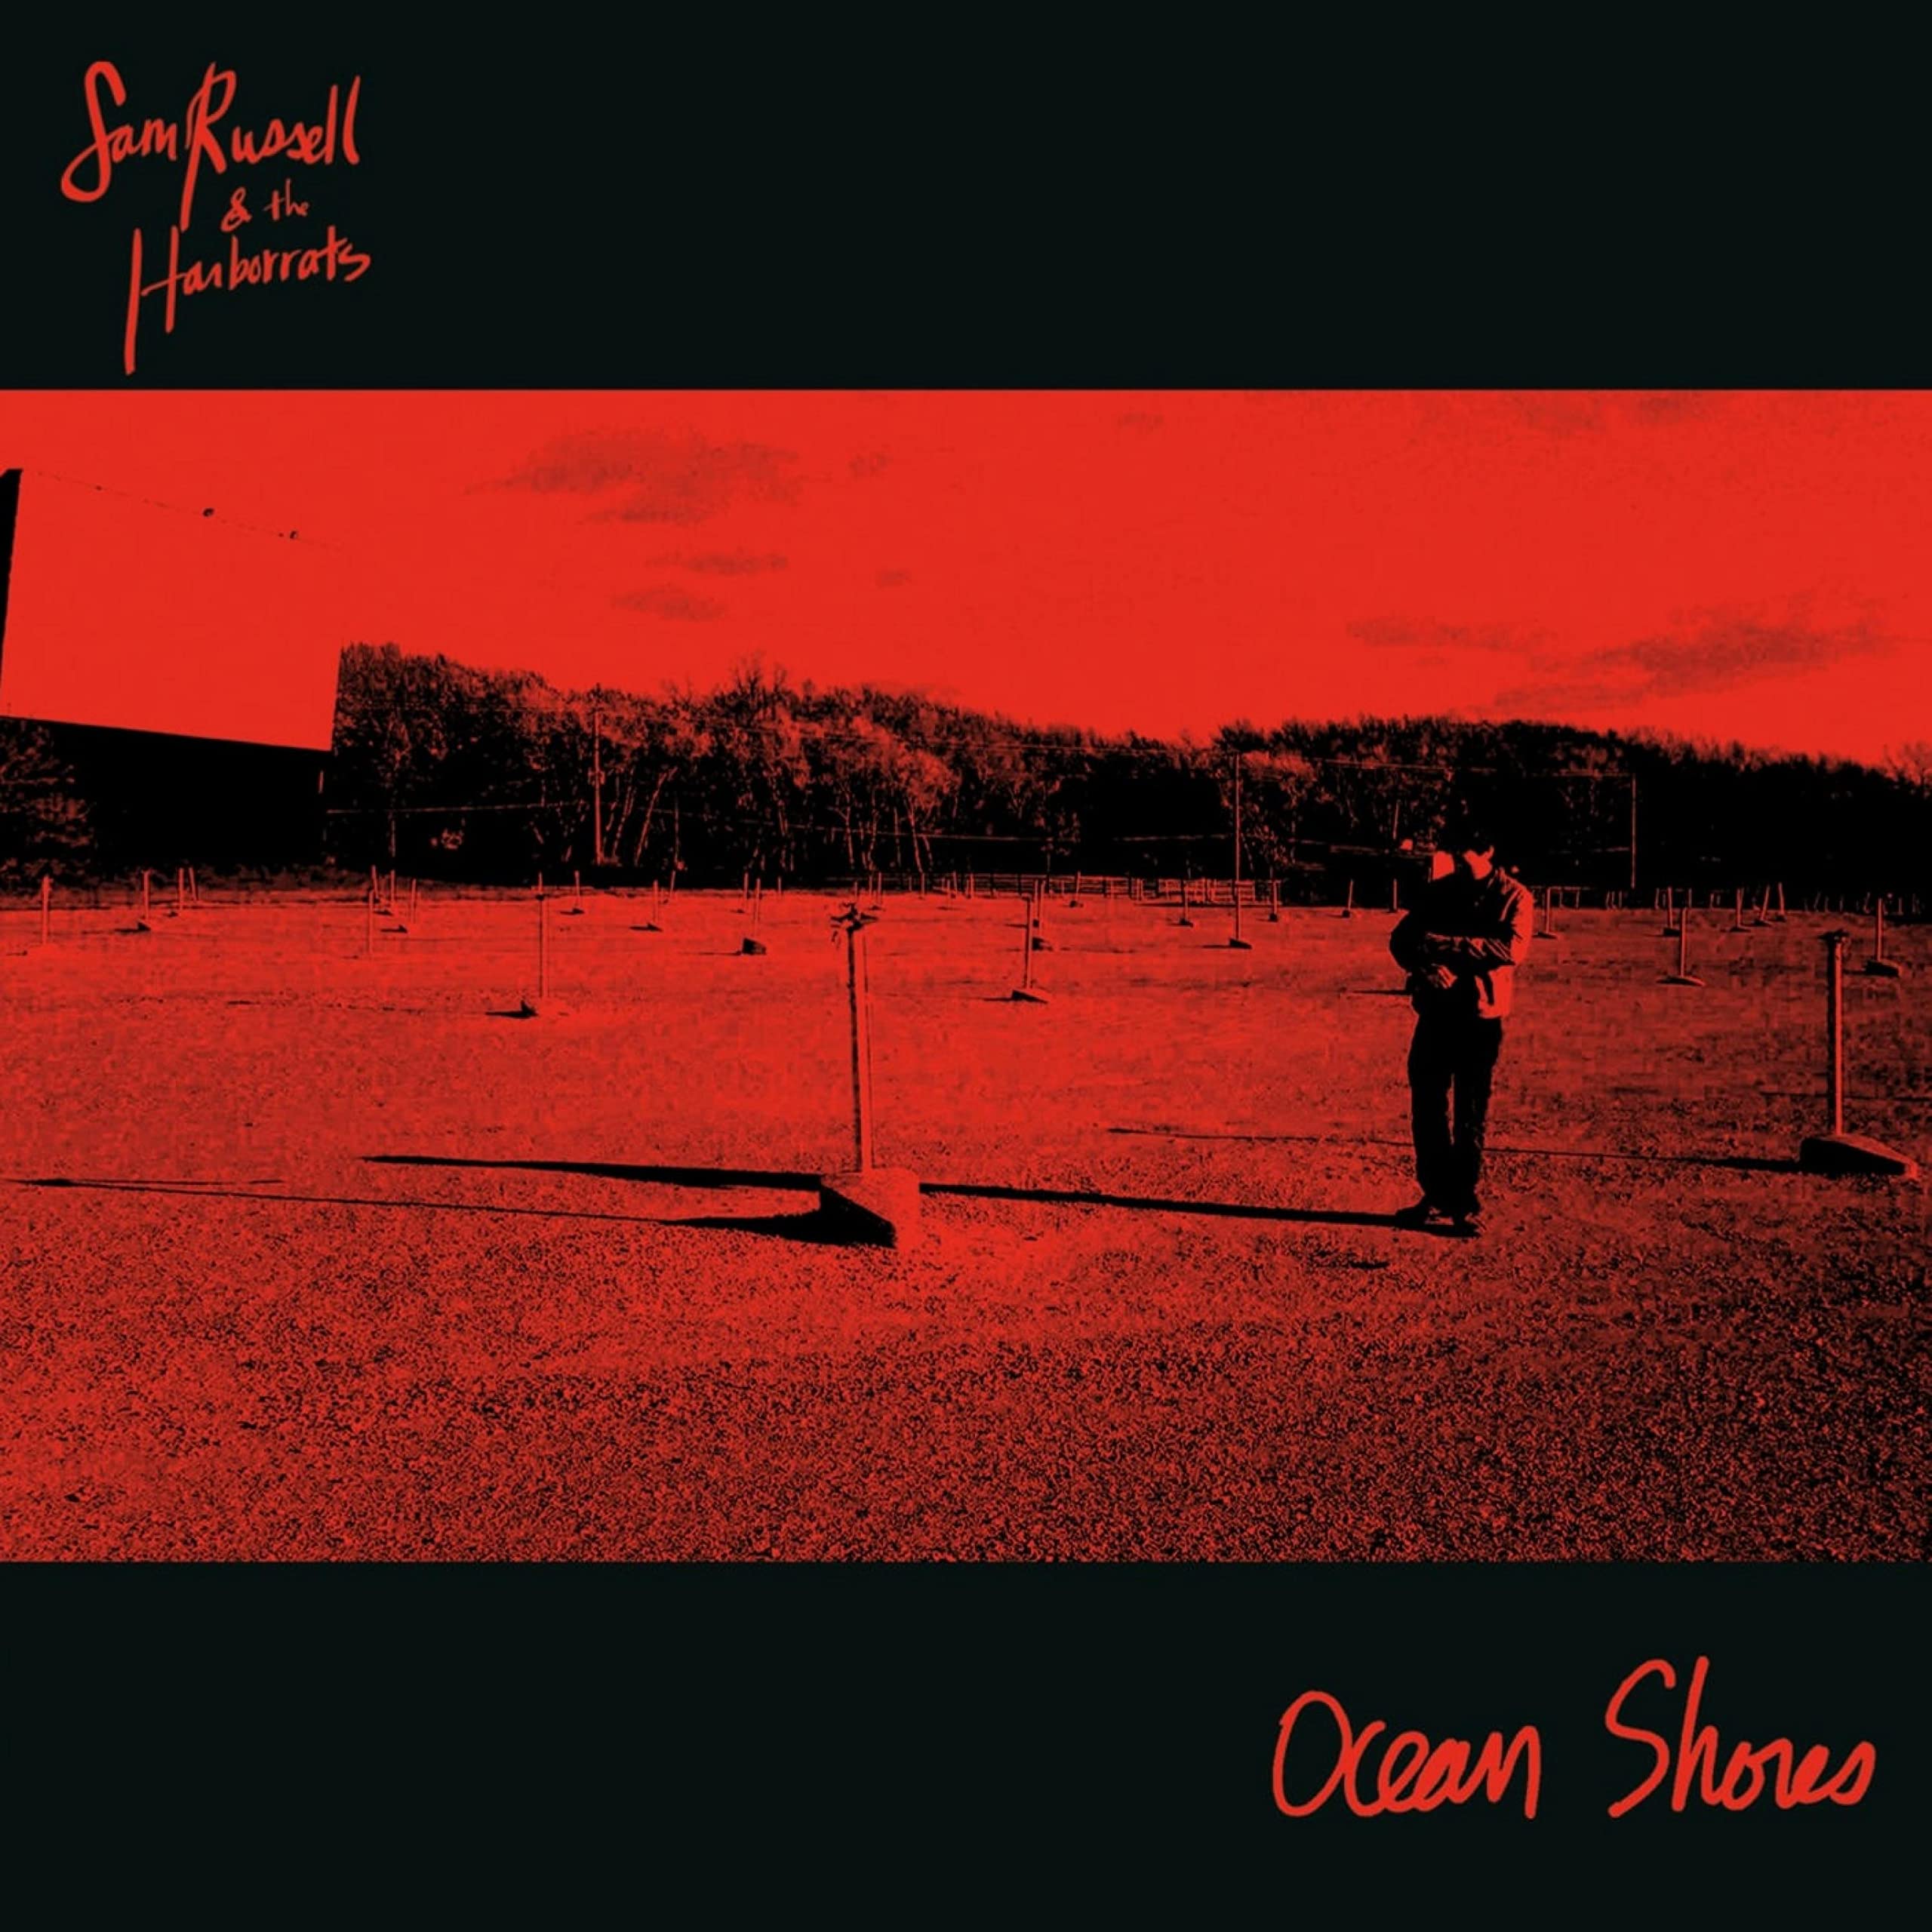 Sam Russell & the Harborrats - Ocean Shores (2021) [FLAC] Download